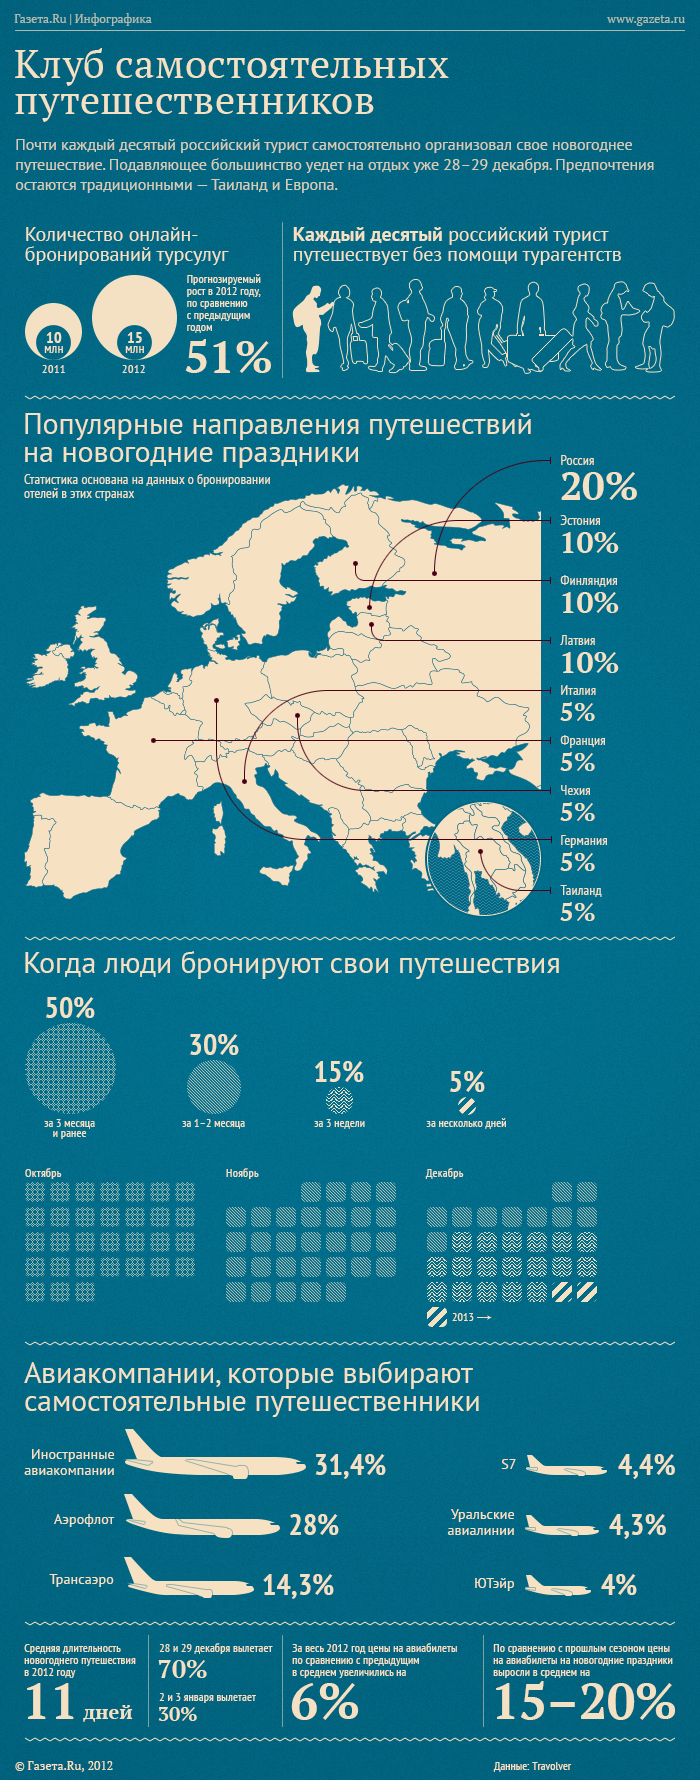 infographic gazeta.ru oil plane Travel